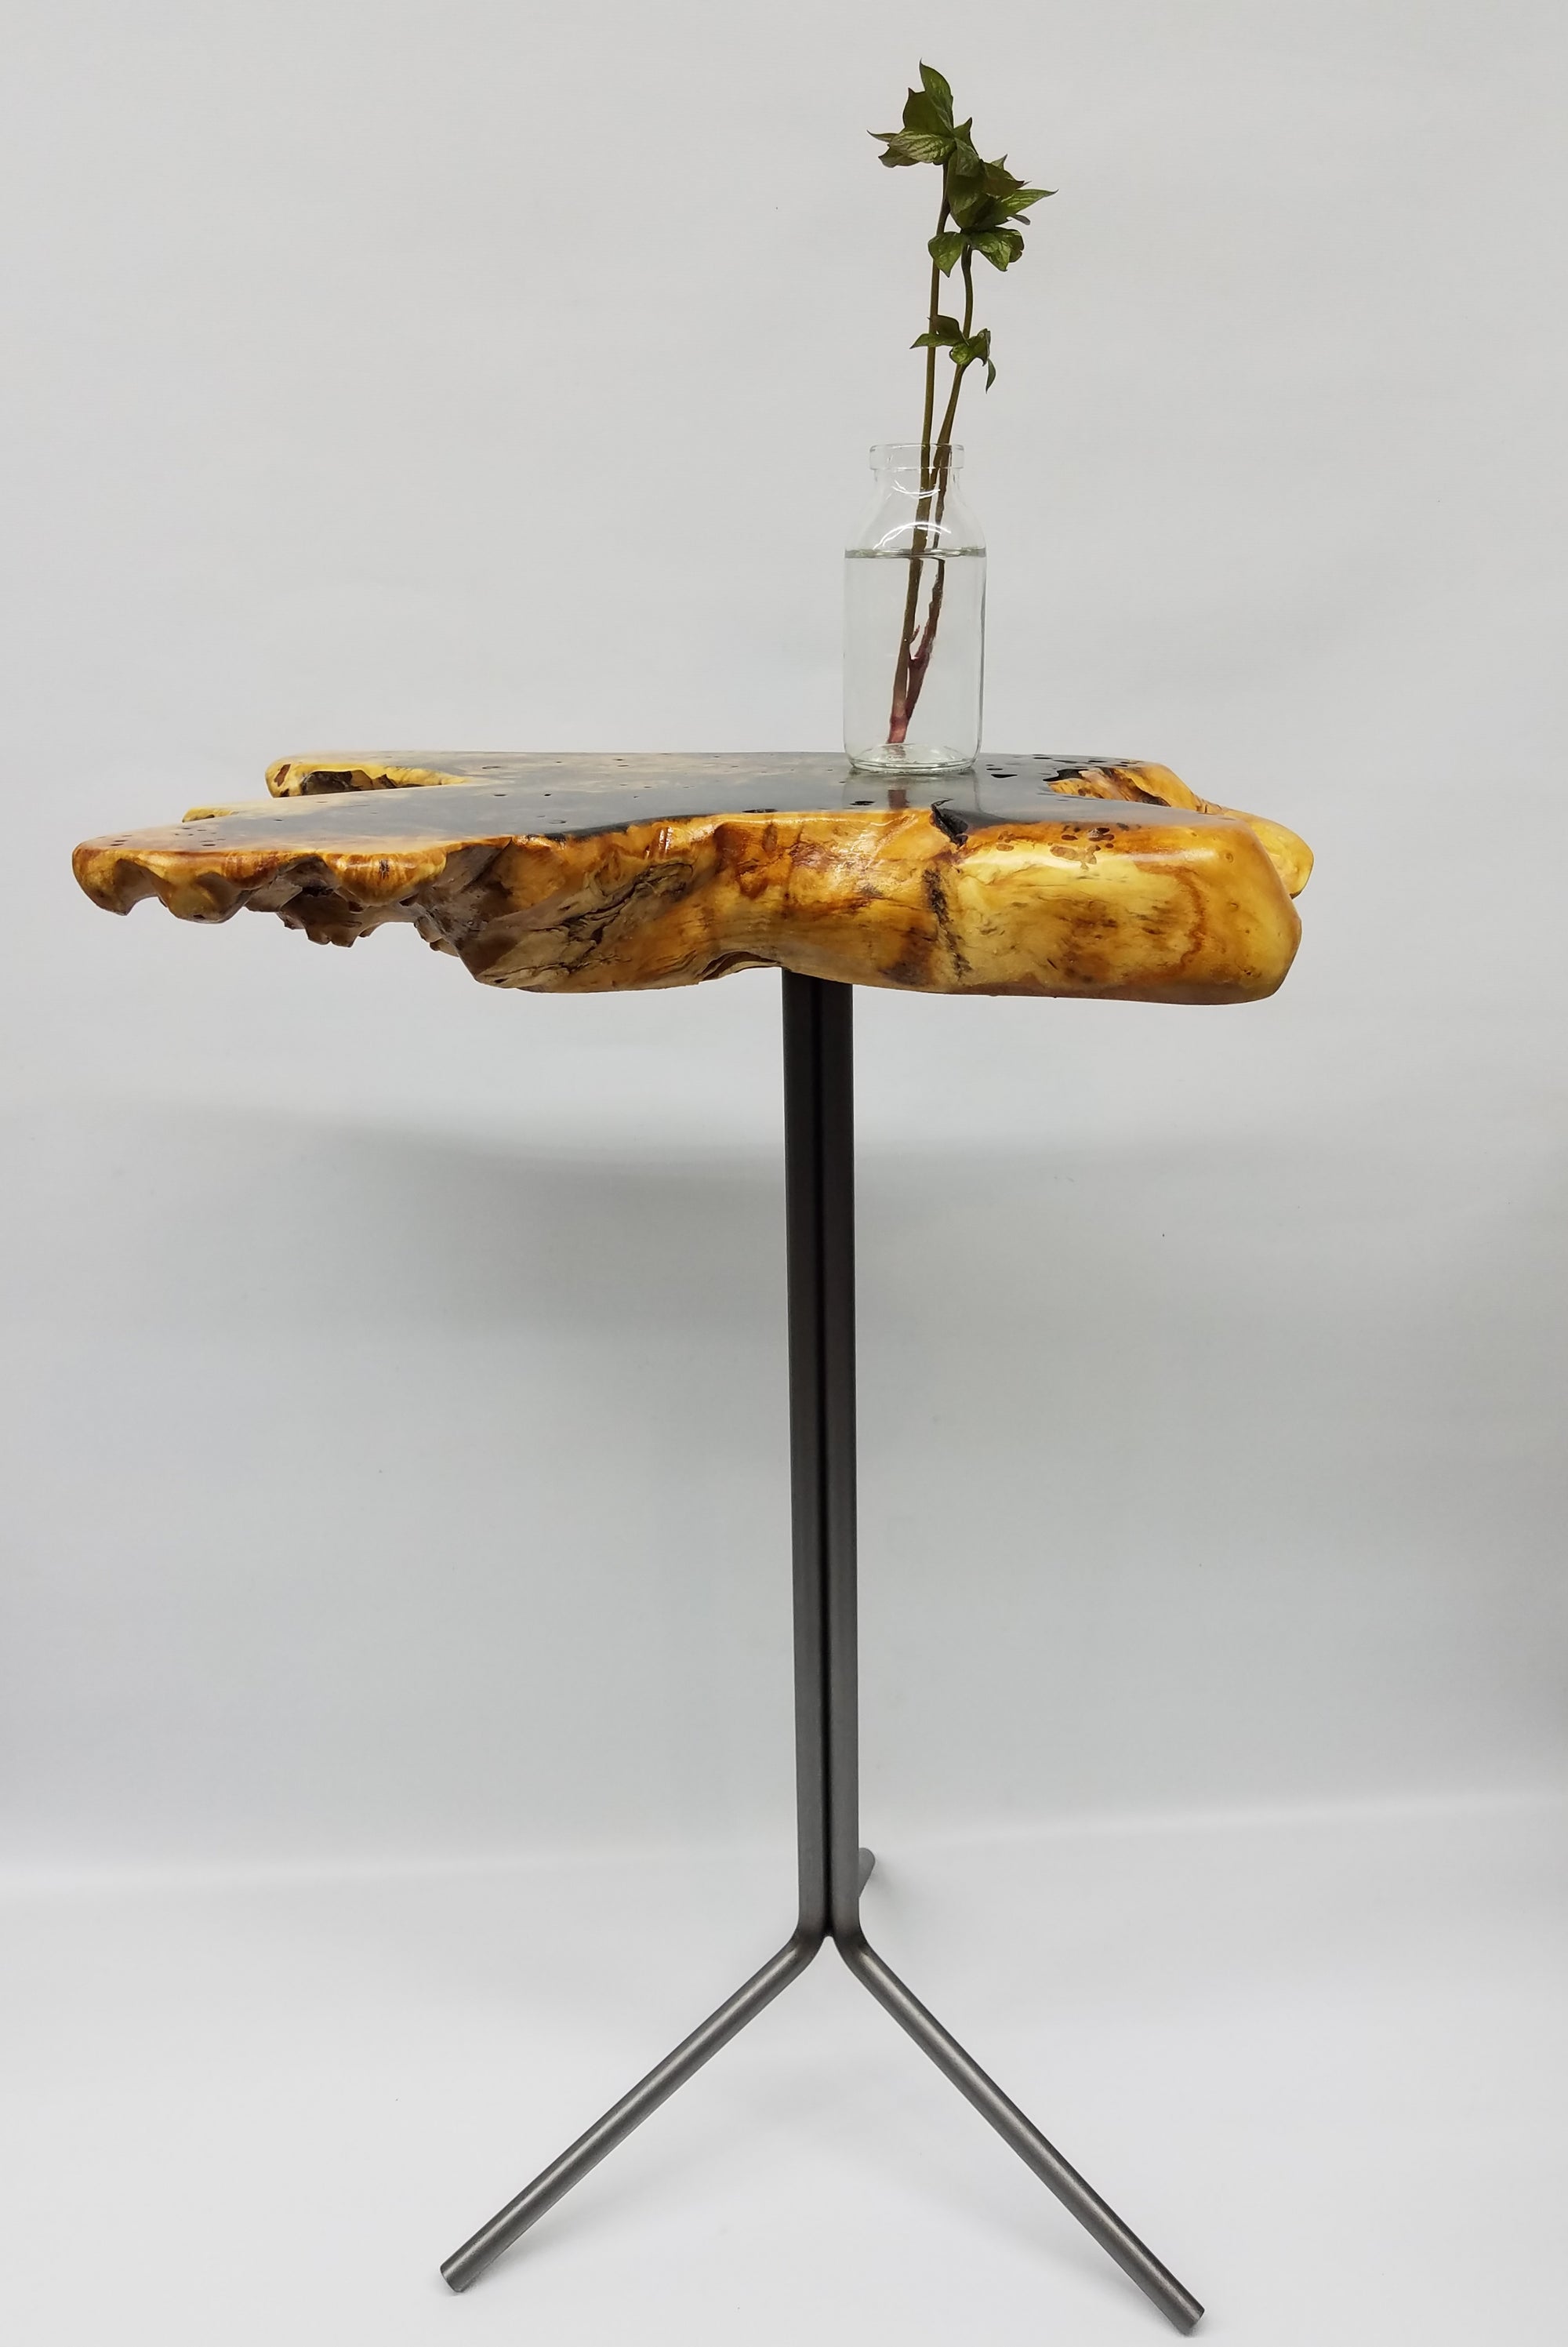 Buckeye Burl Side Table- End Table- Plant Stand- Tree Slice- Live Edge- Natural Wood- Industrial- Mid Century- Steel- Slab Table- Artistic